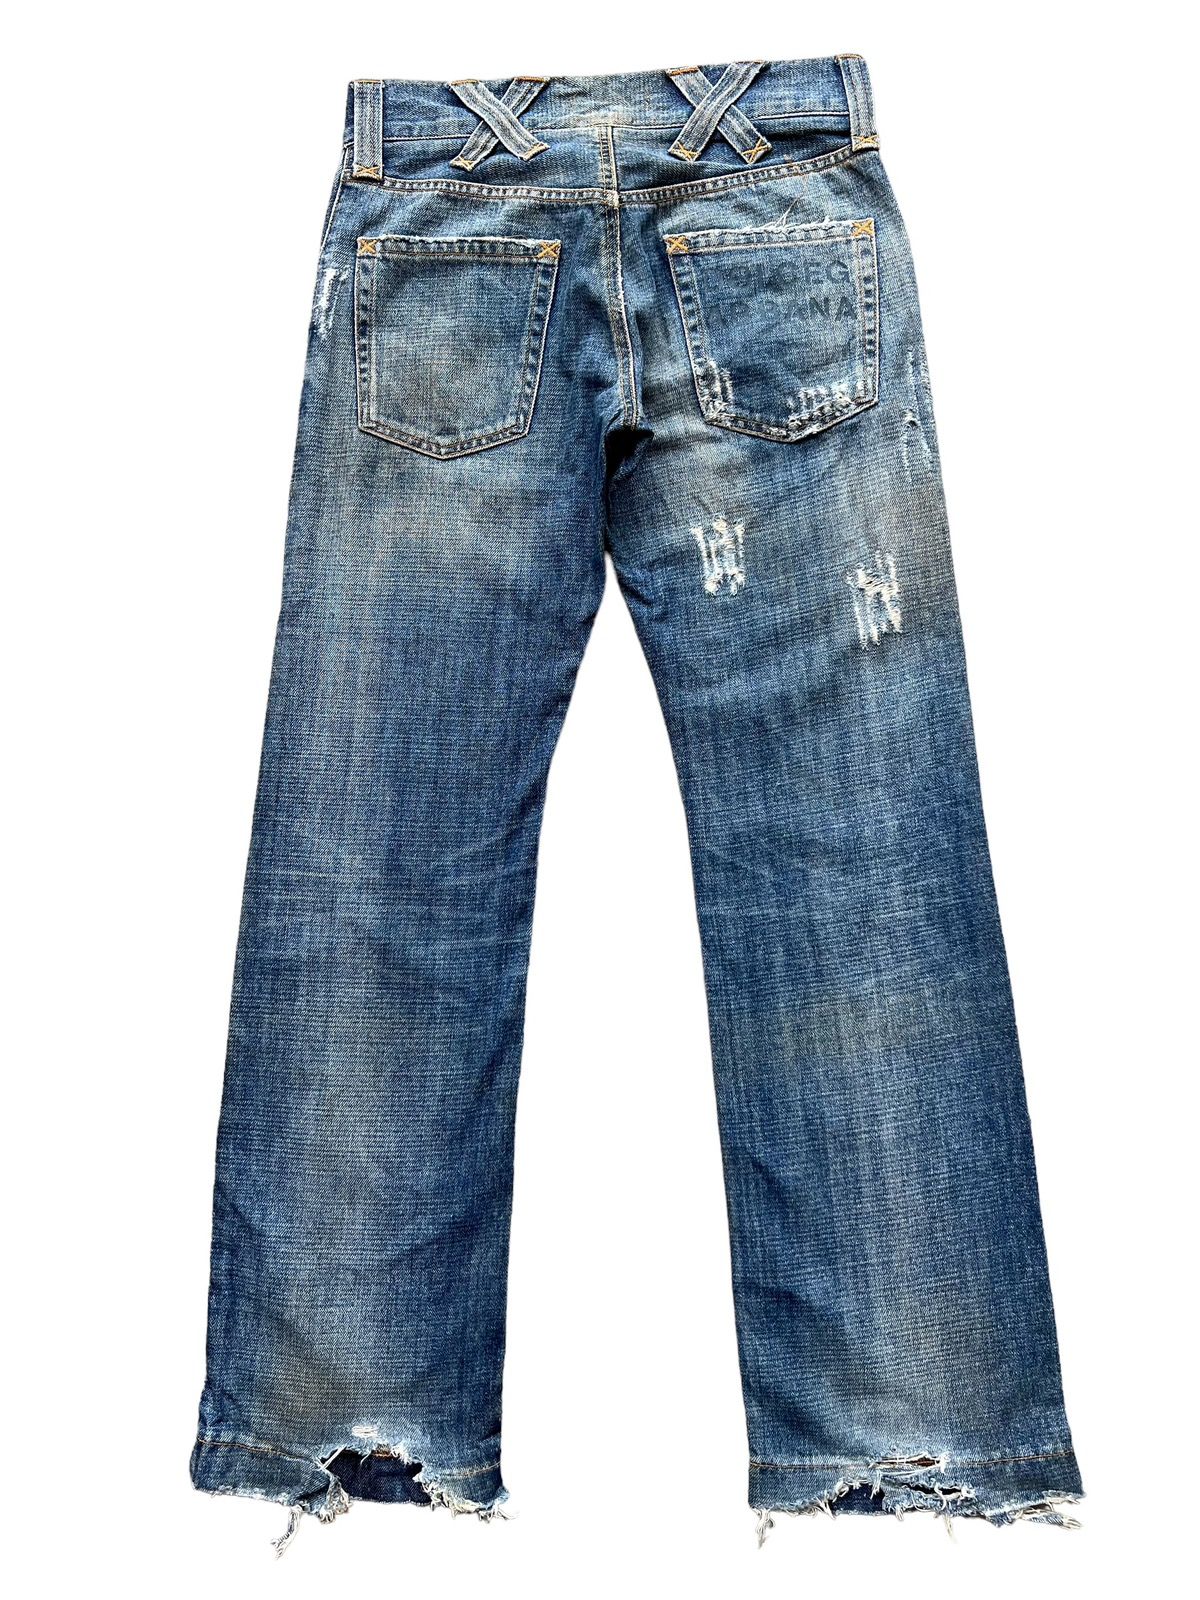 Dolce and Gabbana Crash Distressed Denim Jeans 31x32.5 - 2